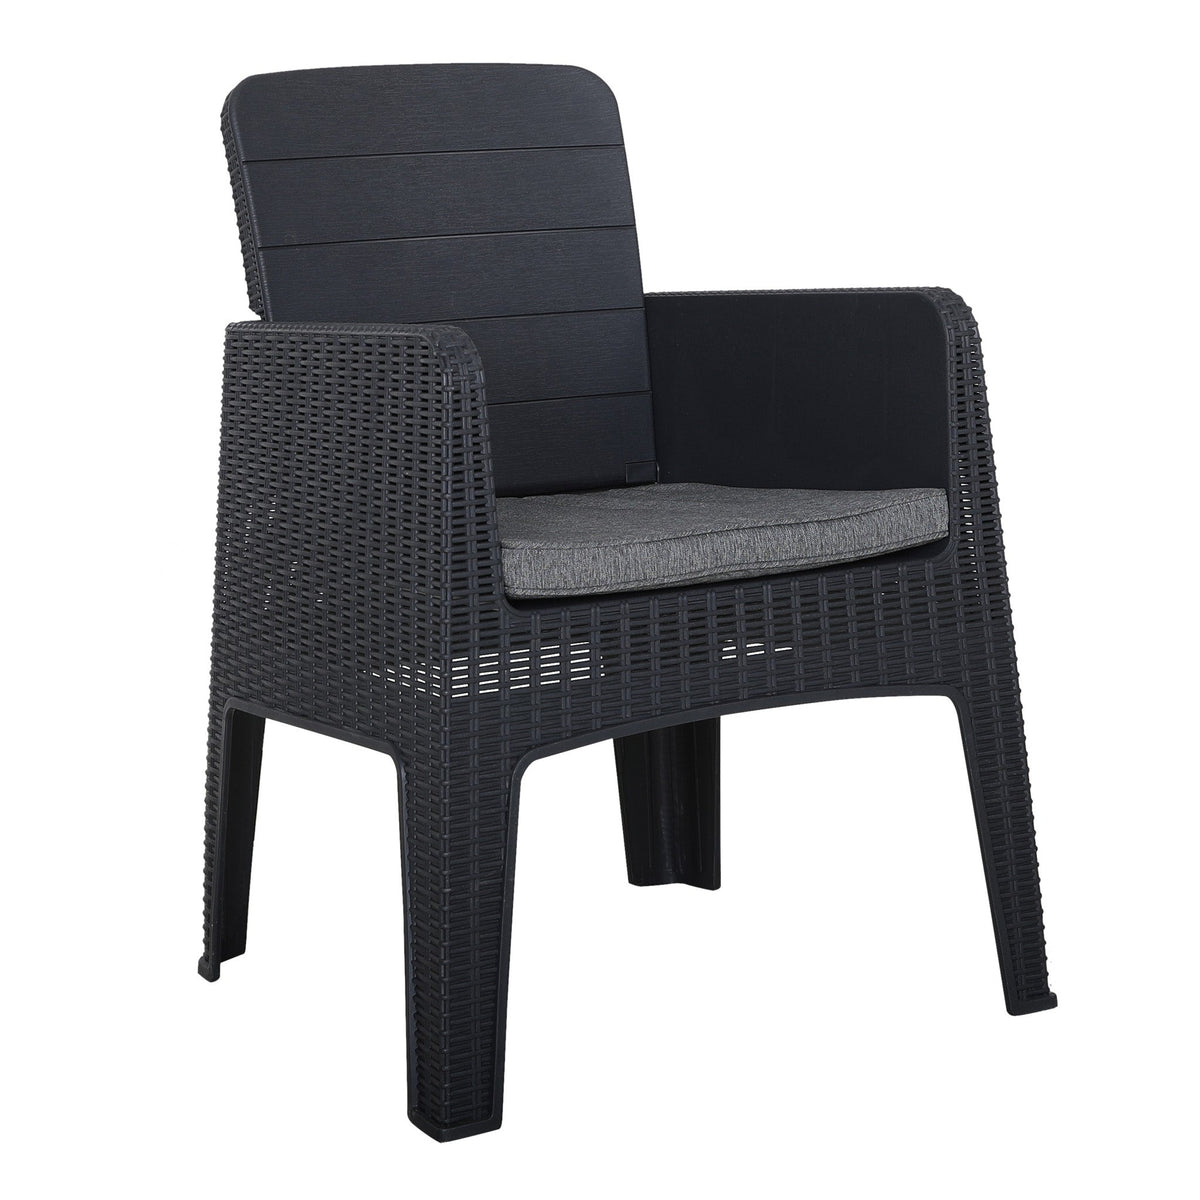 Faro Black 4 Seat Square Garden Dining Set Dining chair